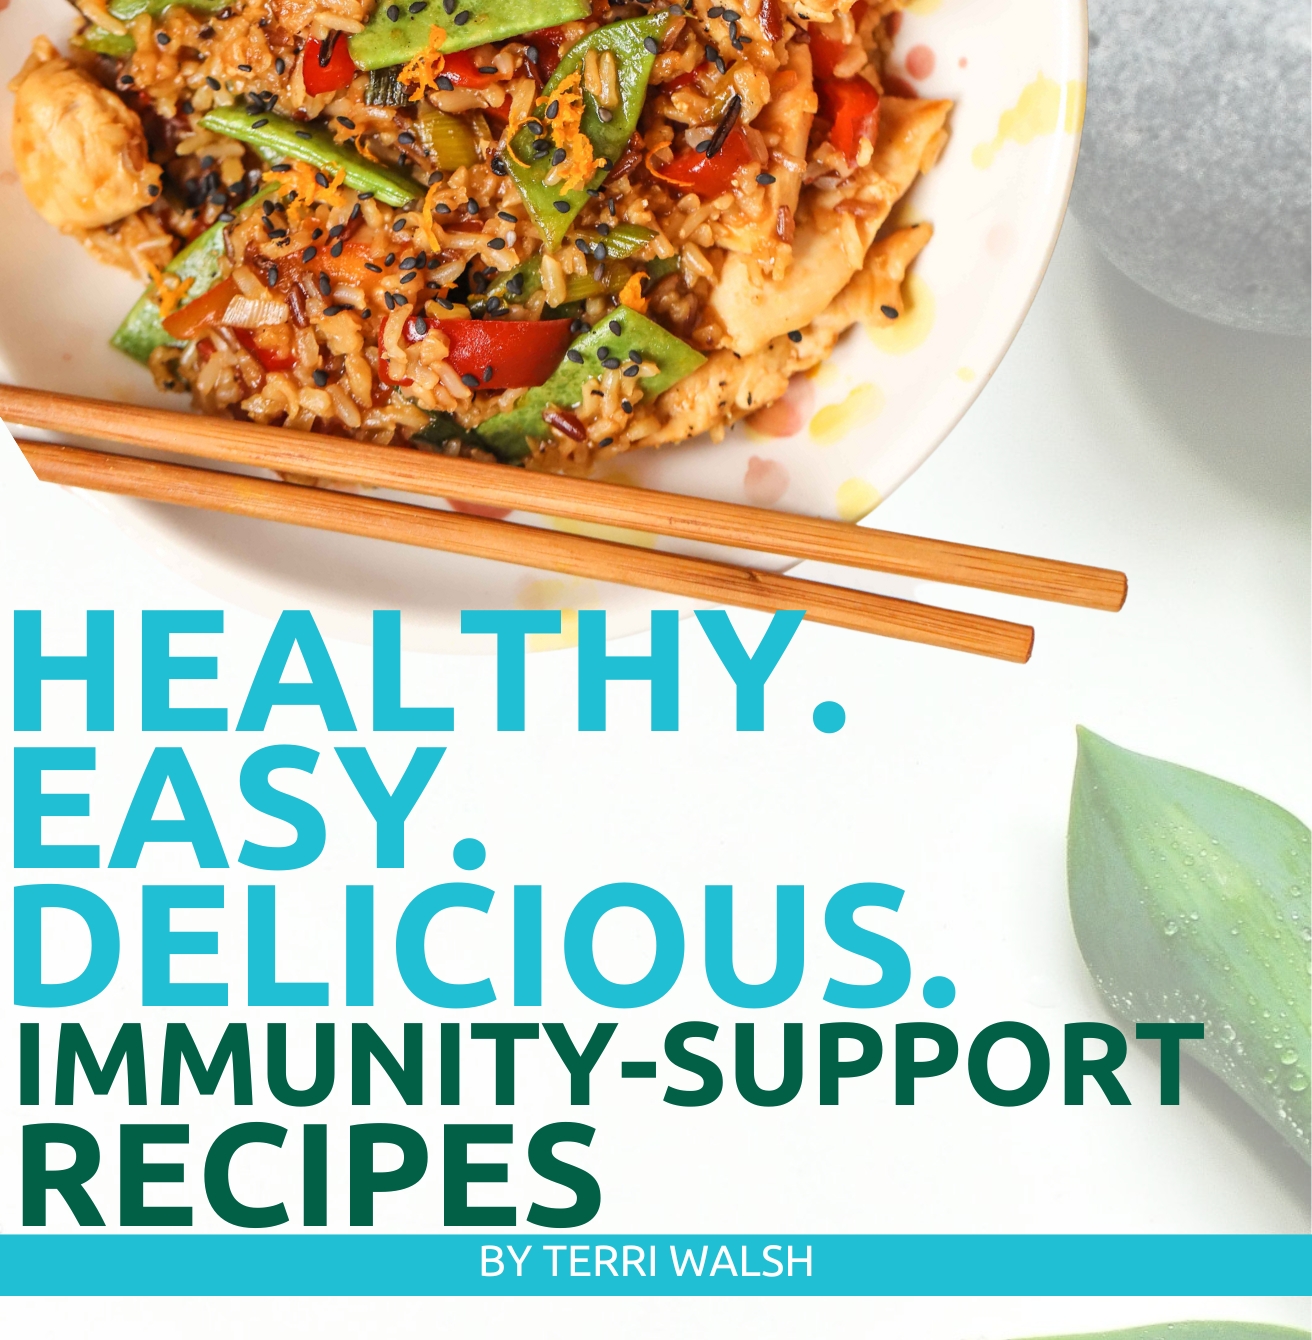 immunity support recipes 